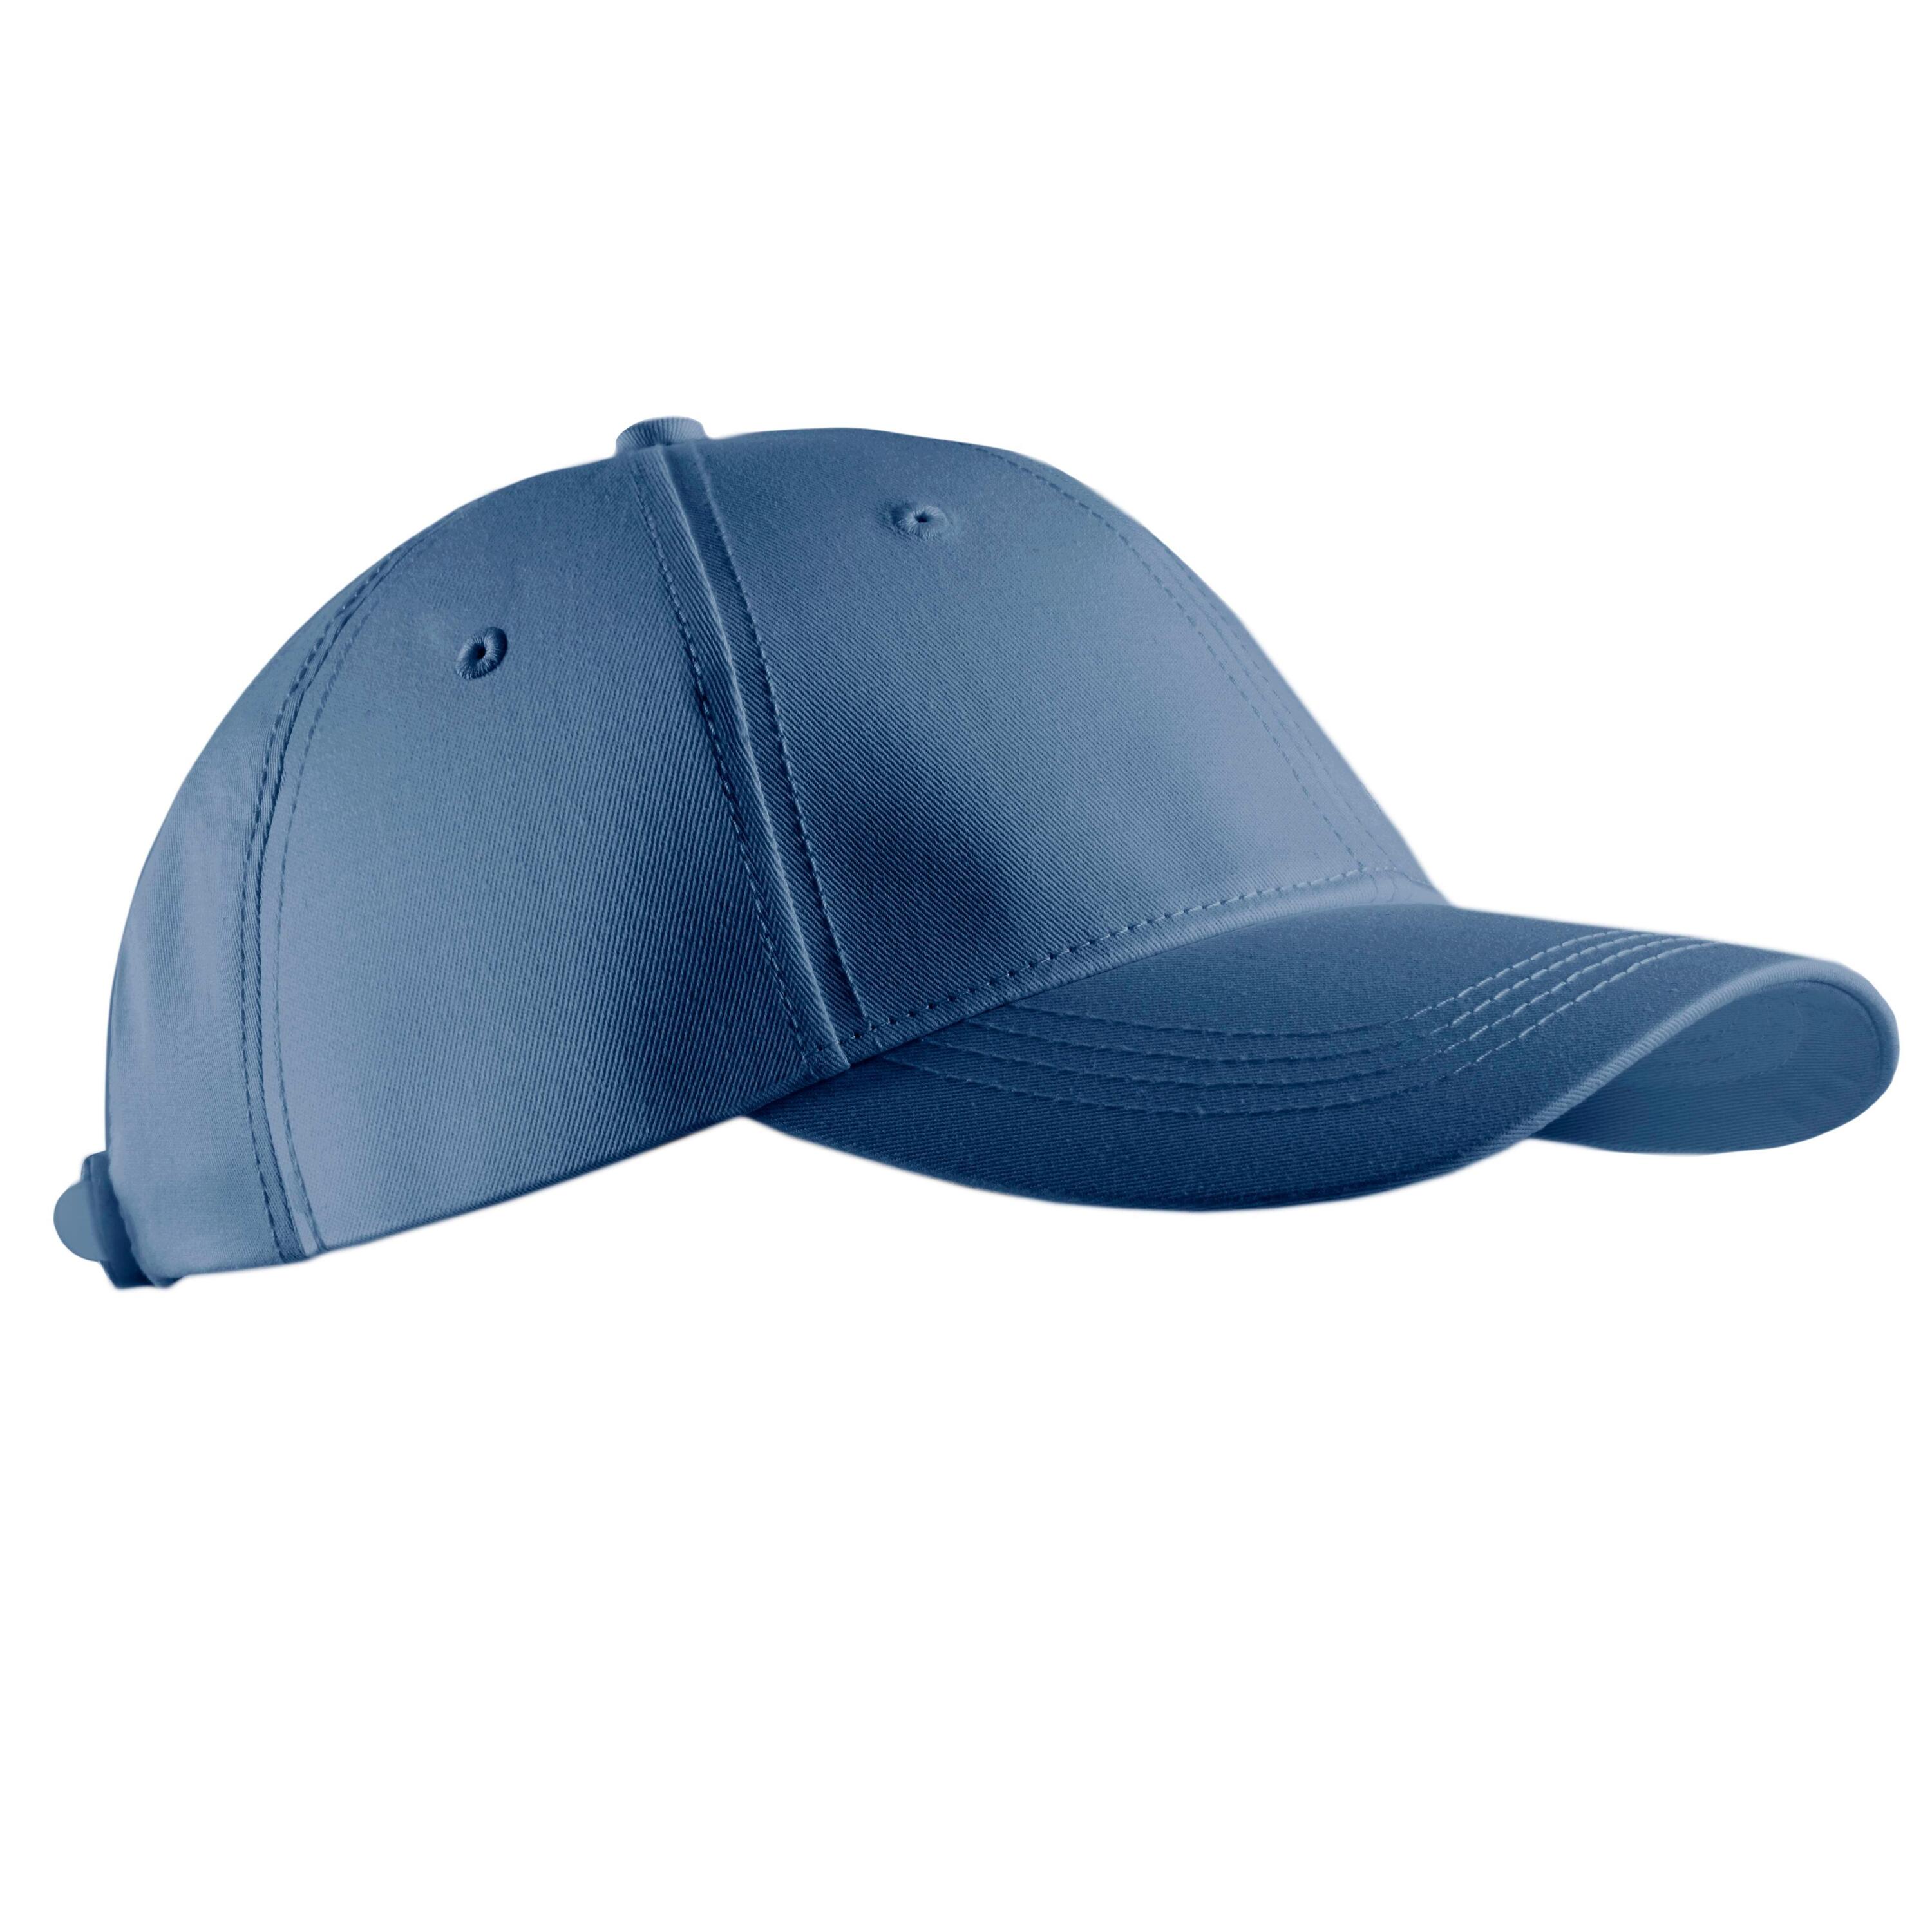 Adult's golf cap - MW 500 blue 2/5